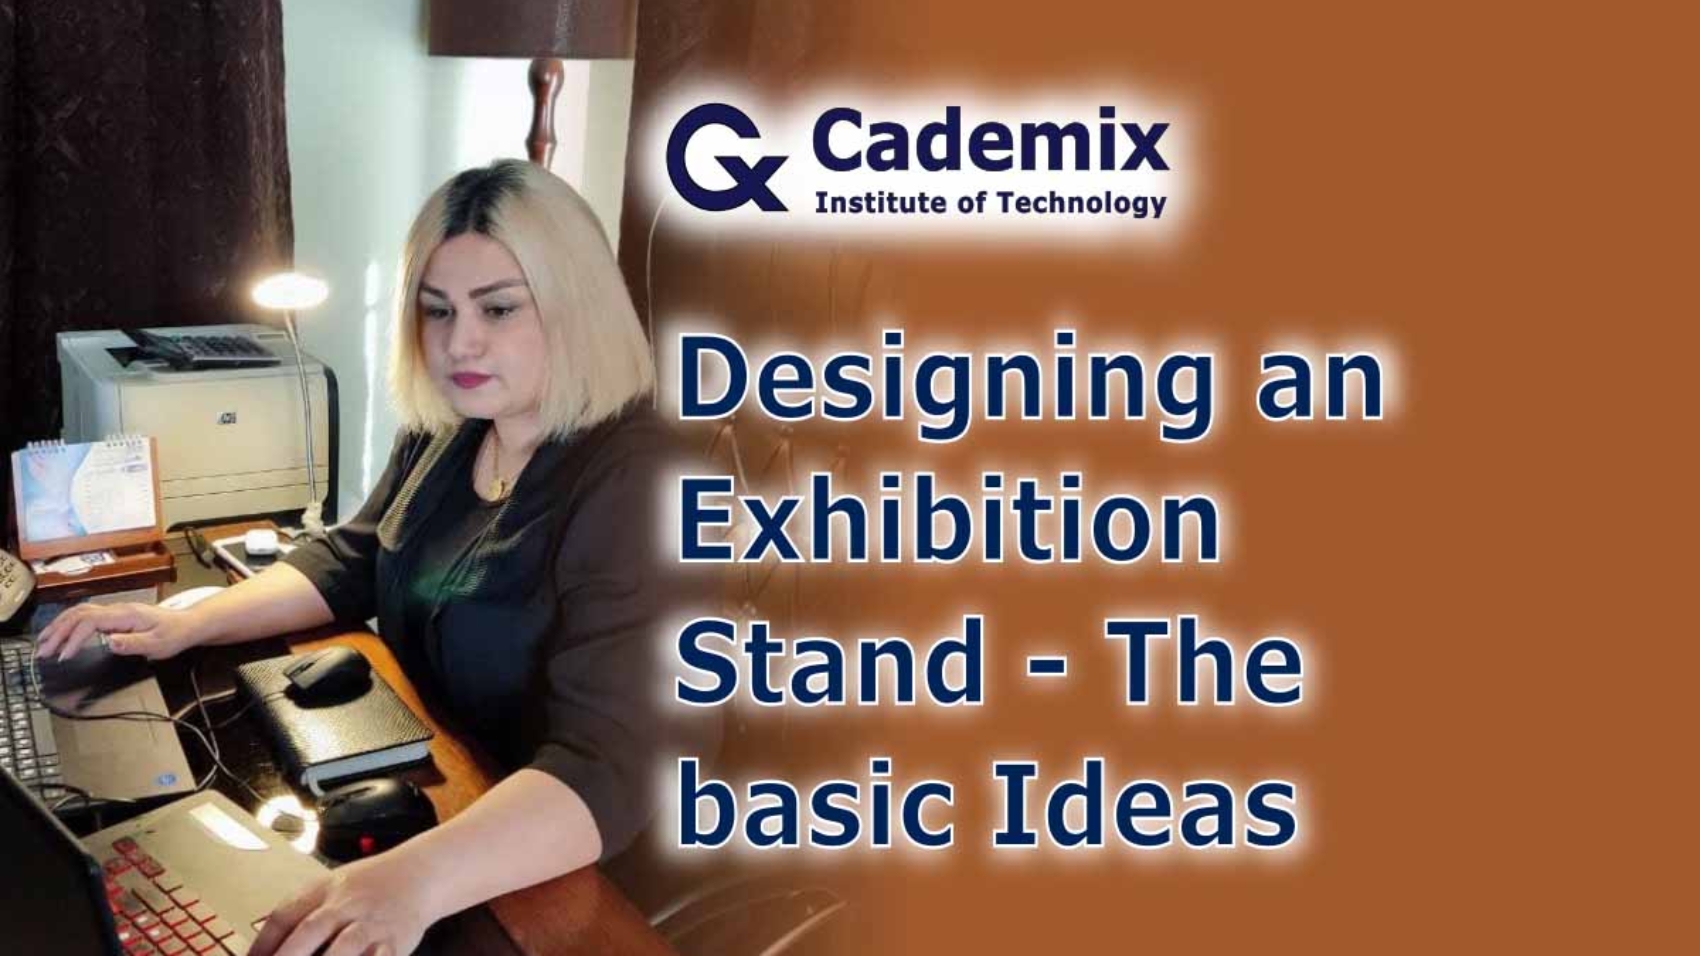 Designing an Exhibition Stand - The basic Ideas, Shahrbanoo (Shohreh) Rajabi, Associate 3D Generalist and Interior Designer at Cademix Institute of Technology